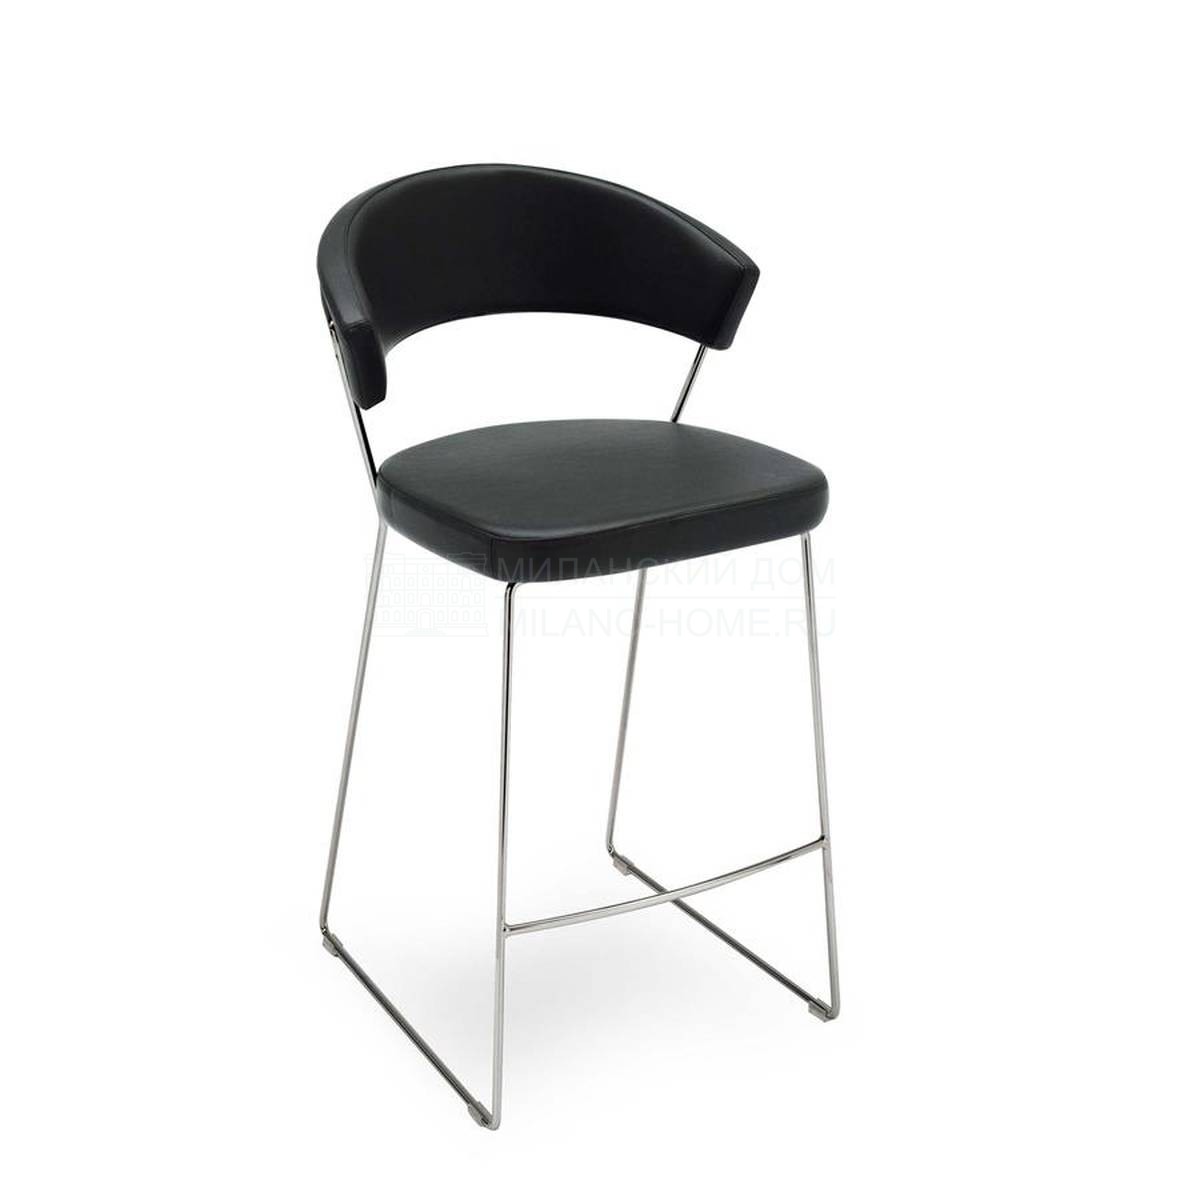 Барный стул Softy / stool из Италии фабрики ASTER Cucine